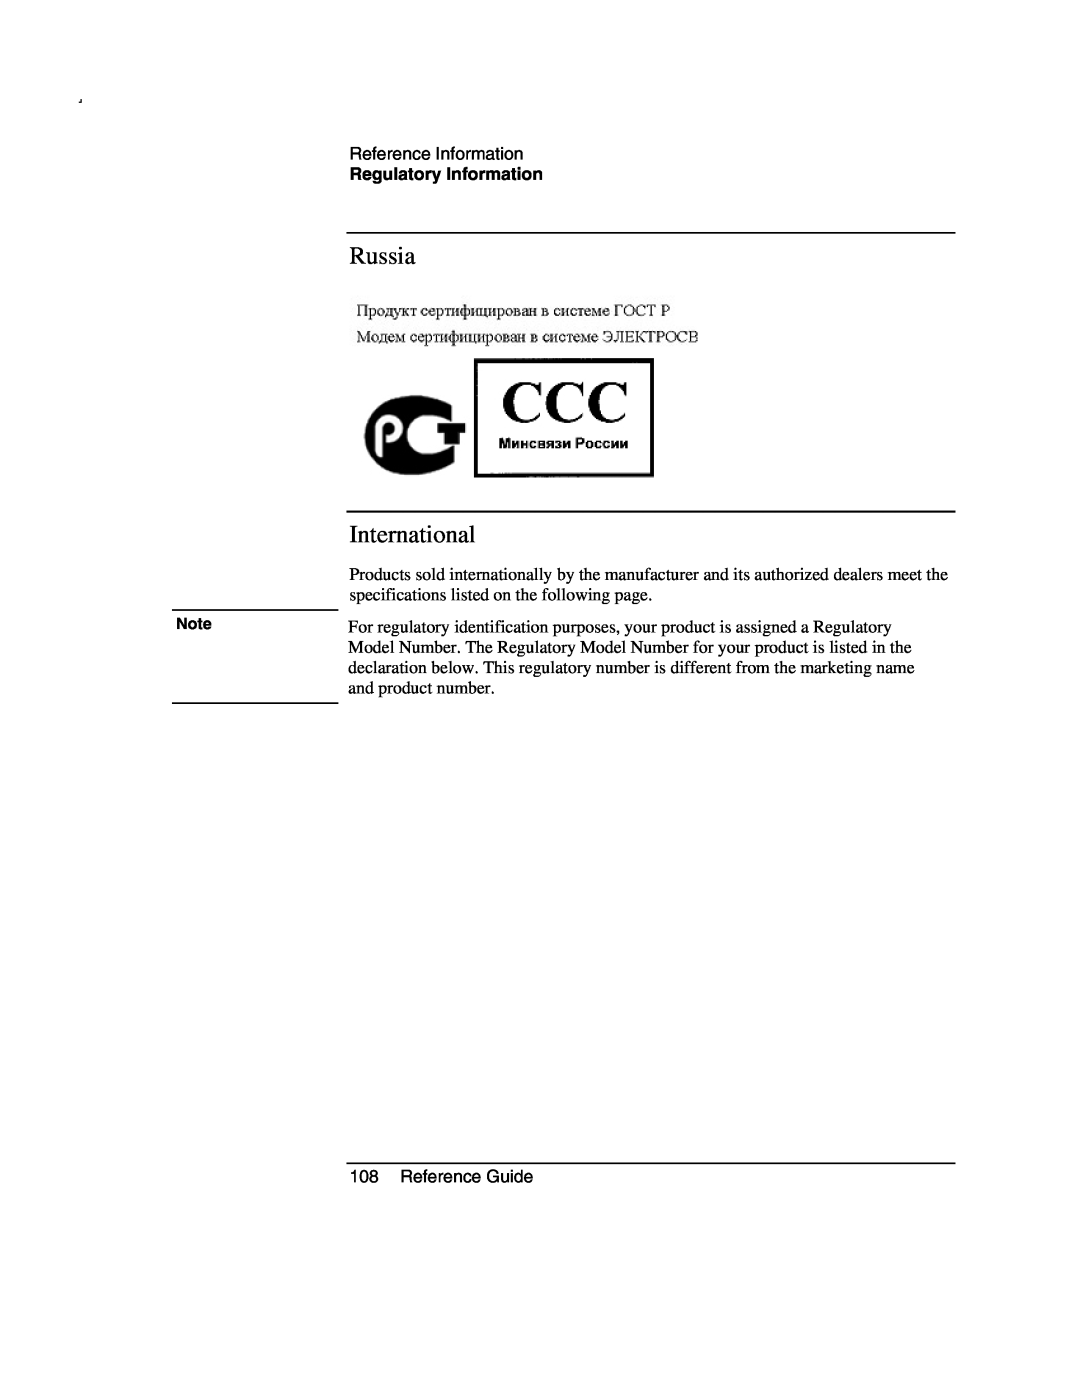 Compaq AMC20493-KT5 manual Russia, International, Regulatory Information 